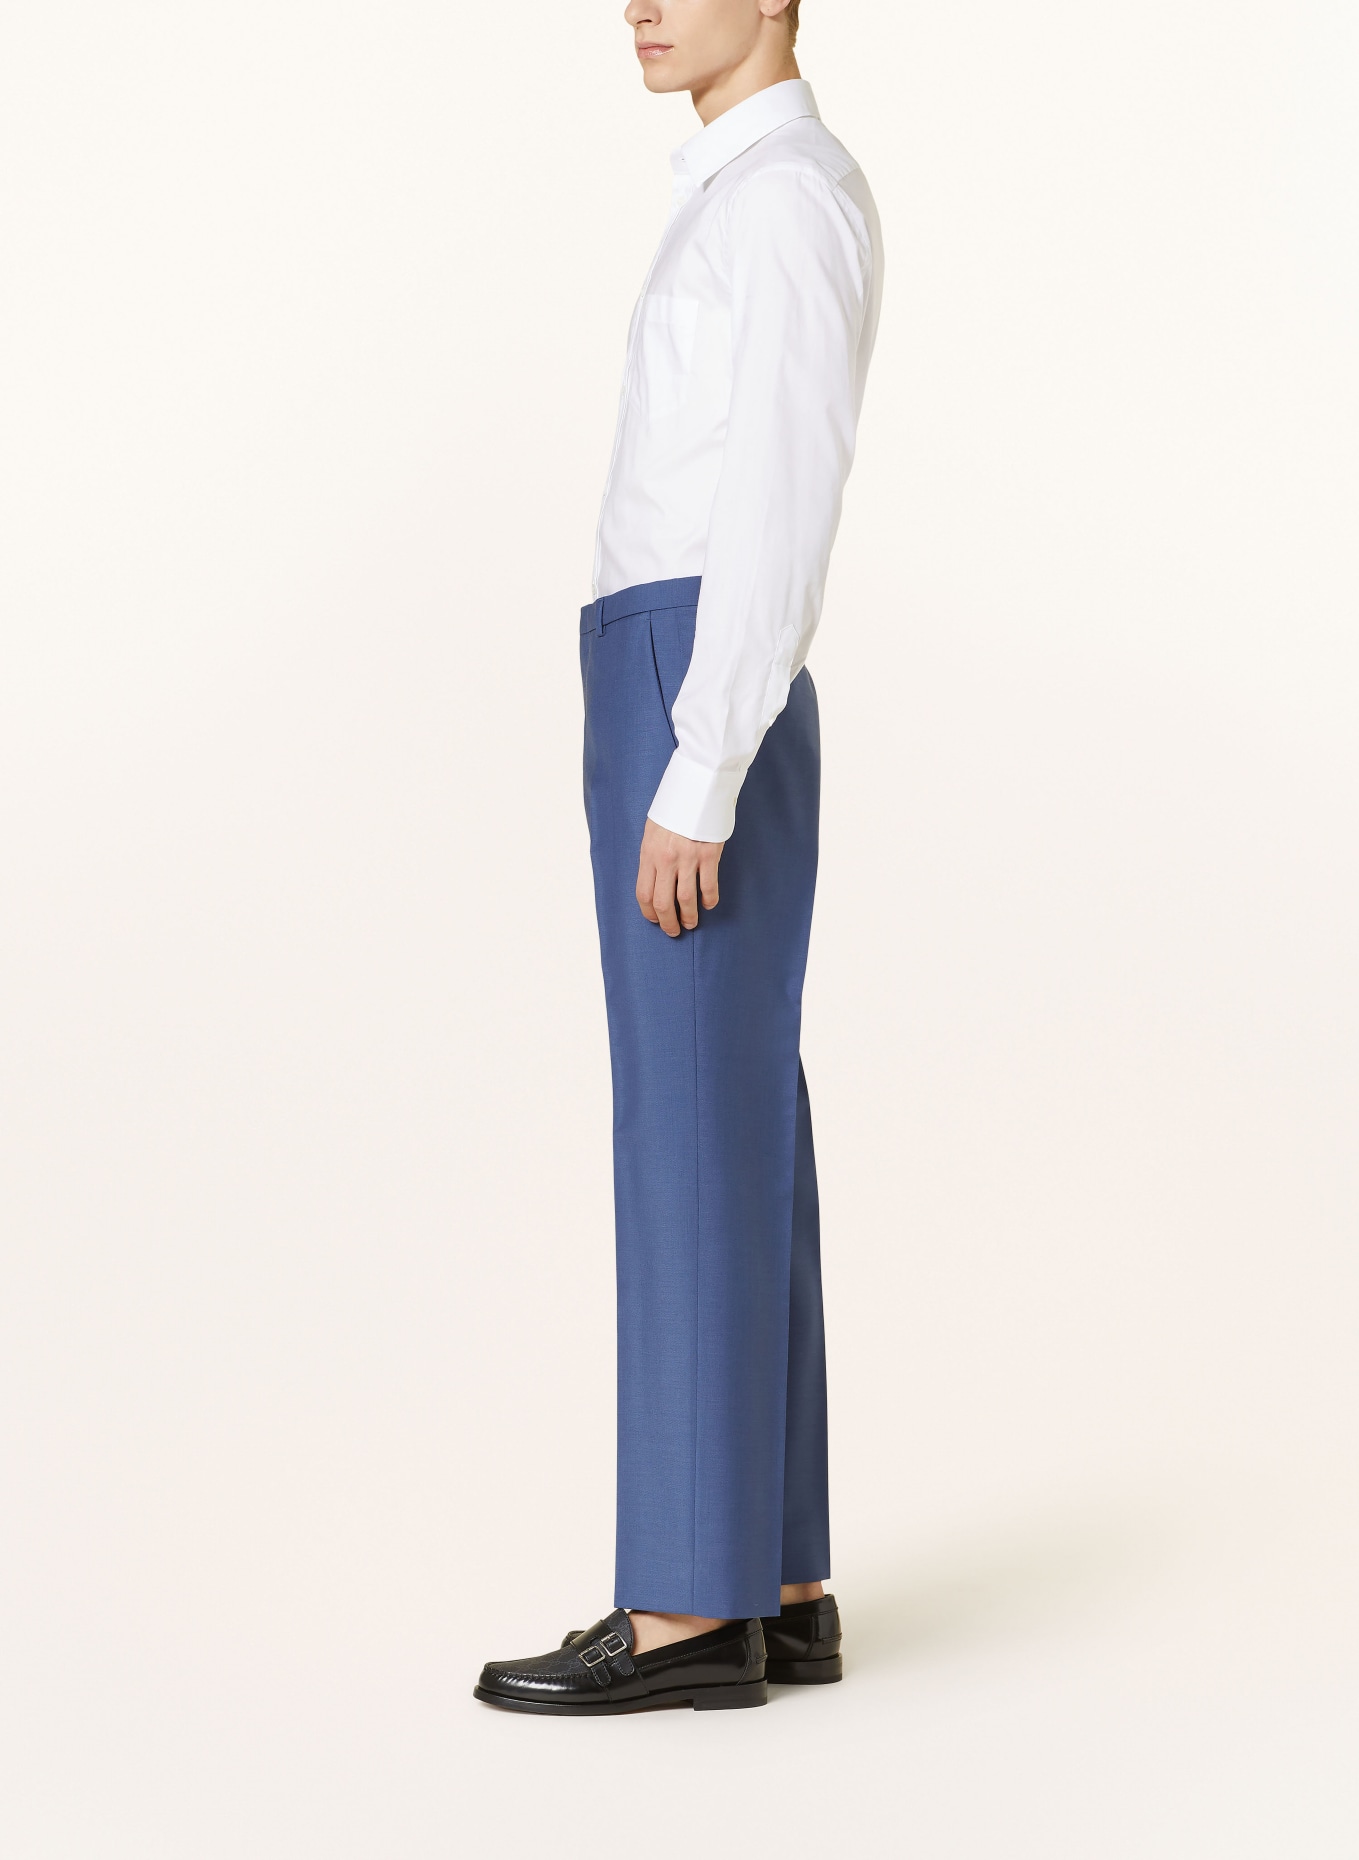 GUCCI Anzughose Slim Fit mit Mohair, Farbe: 4719 STORMY SEA (LIGHT BLUE) (Bild 5)